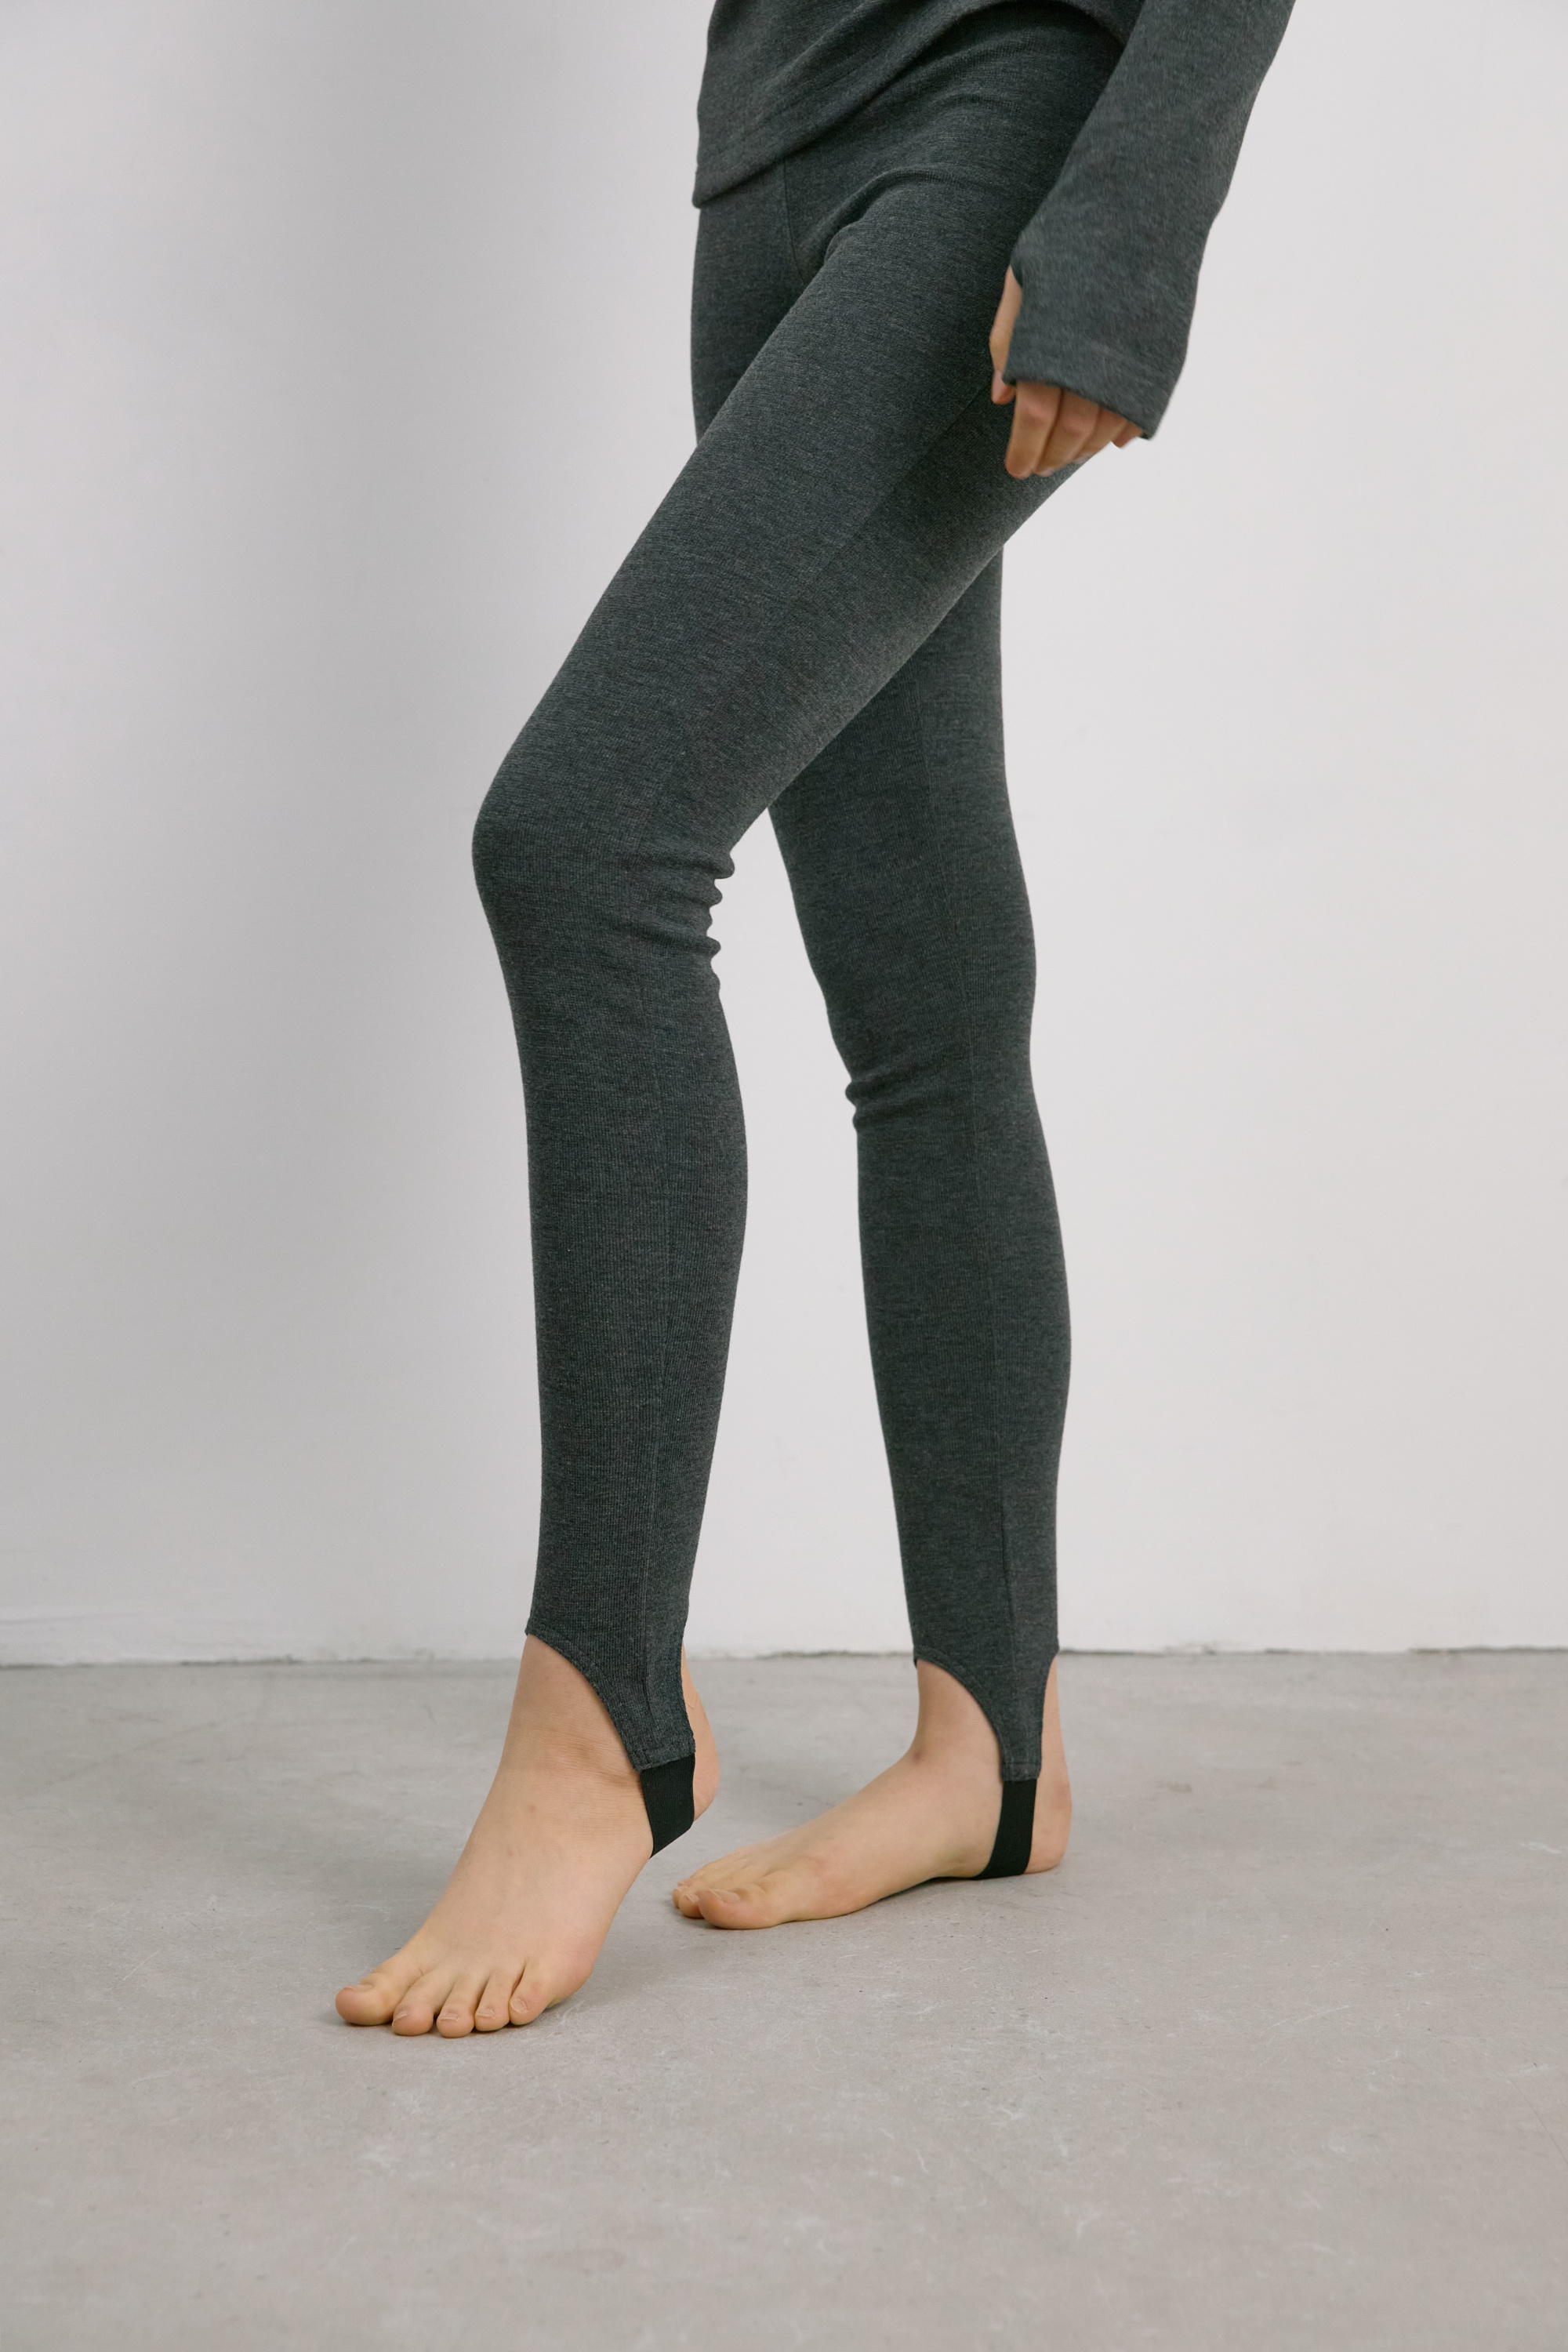 Stirrup leggings, pattern №890 buy on-line